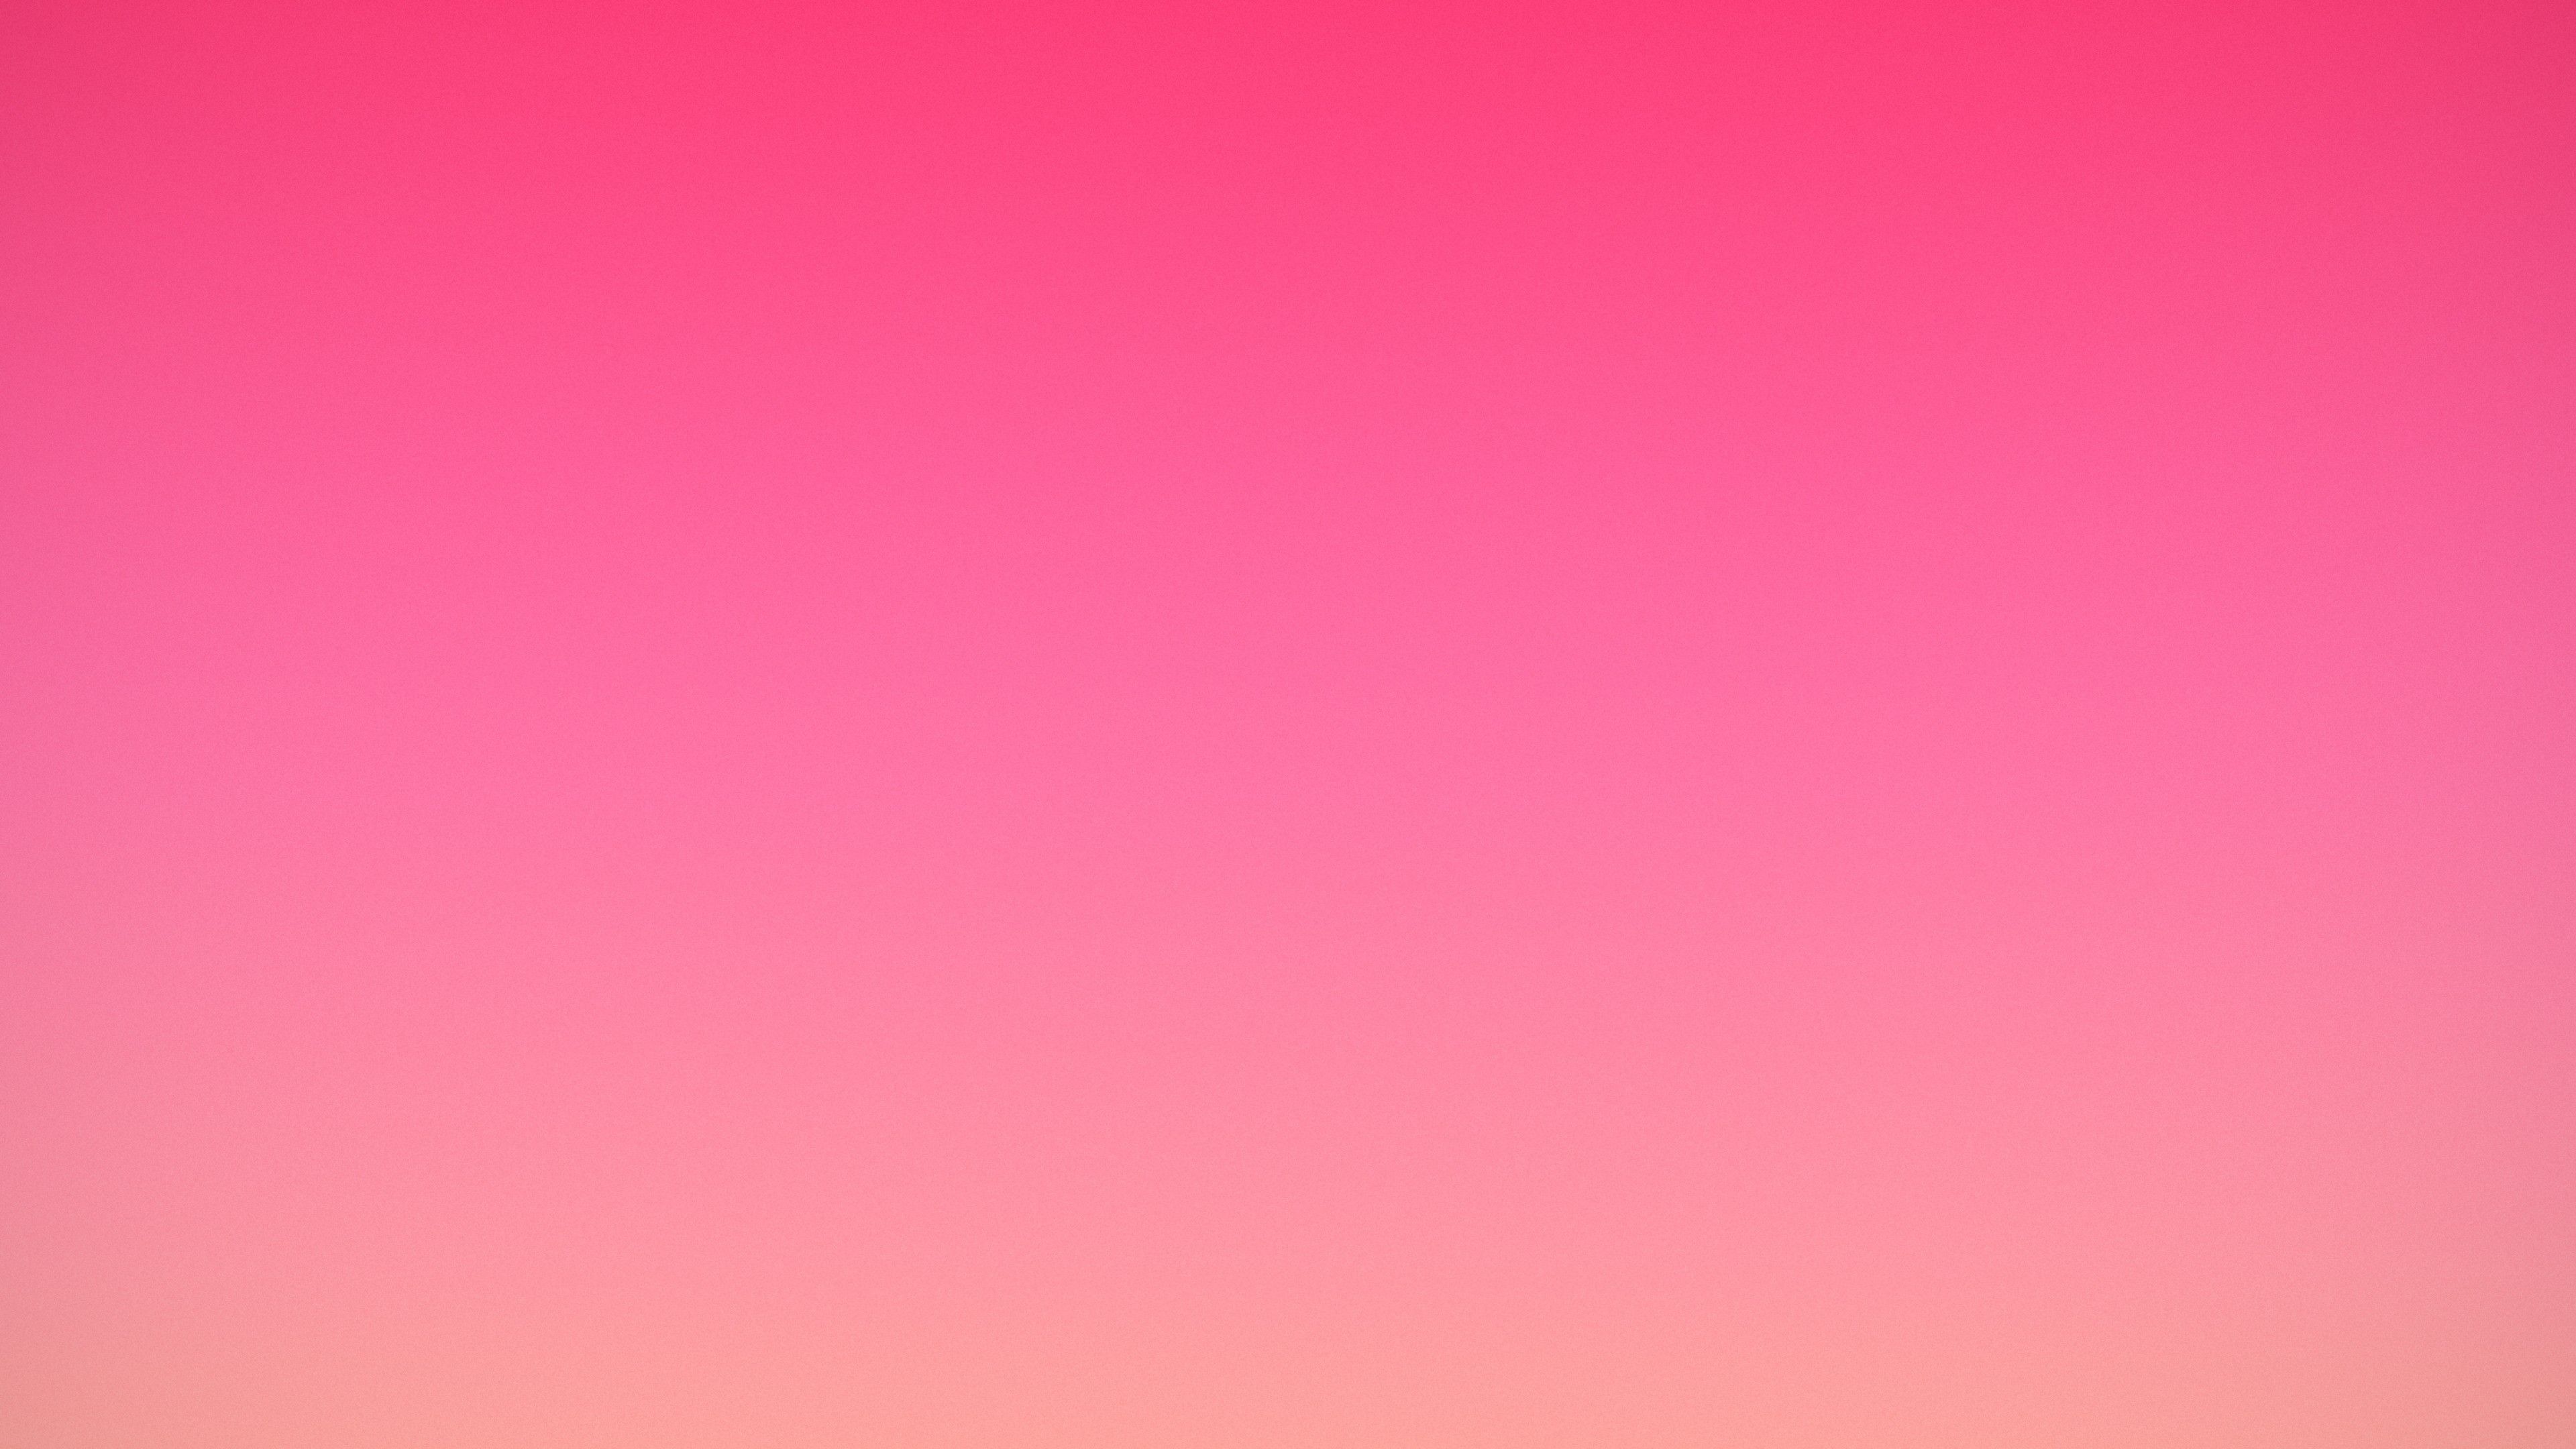 Fondos de pantalla rosa liso - FondosMil